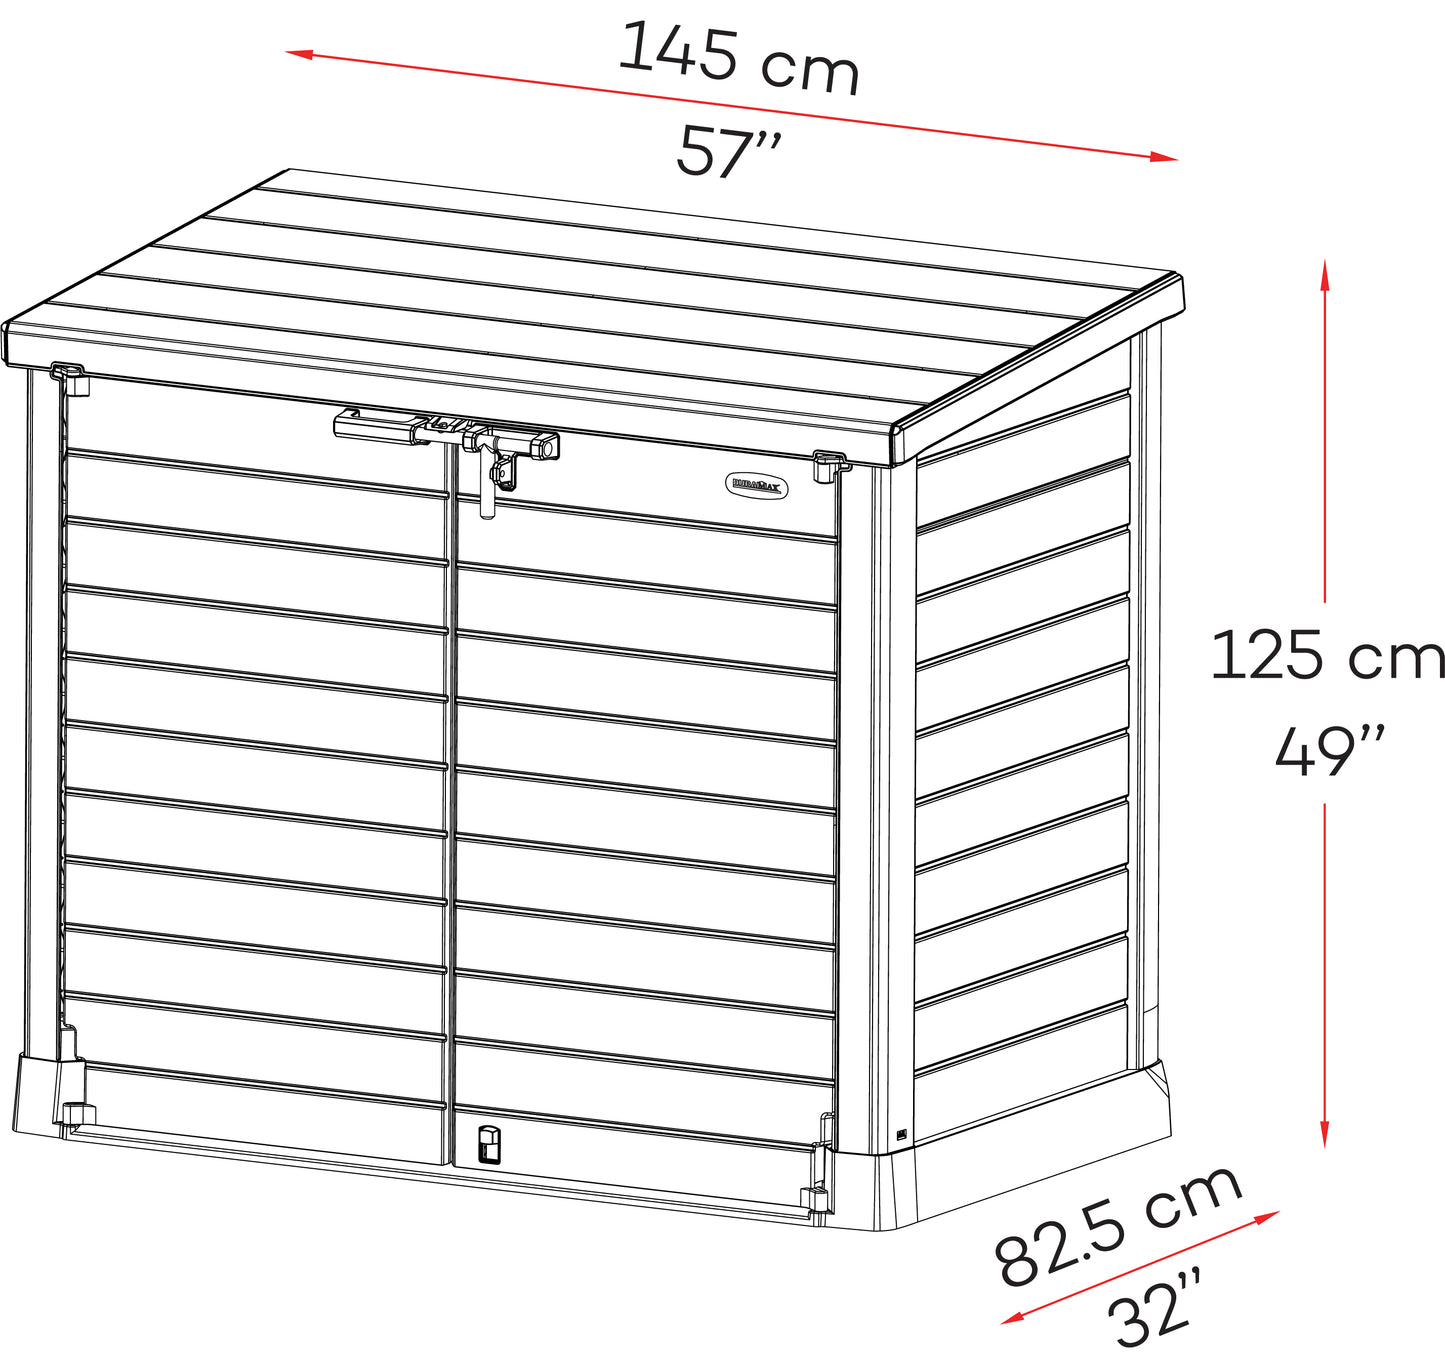 Duramax Storeaway 1200 L garden storage shed dimensions , 1.45 x 1.25